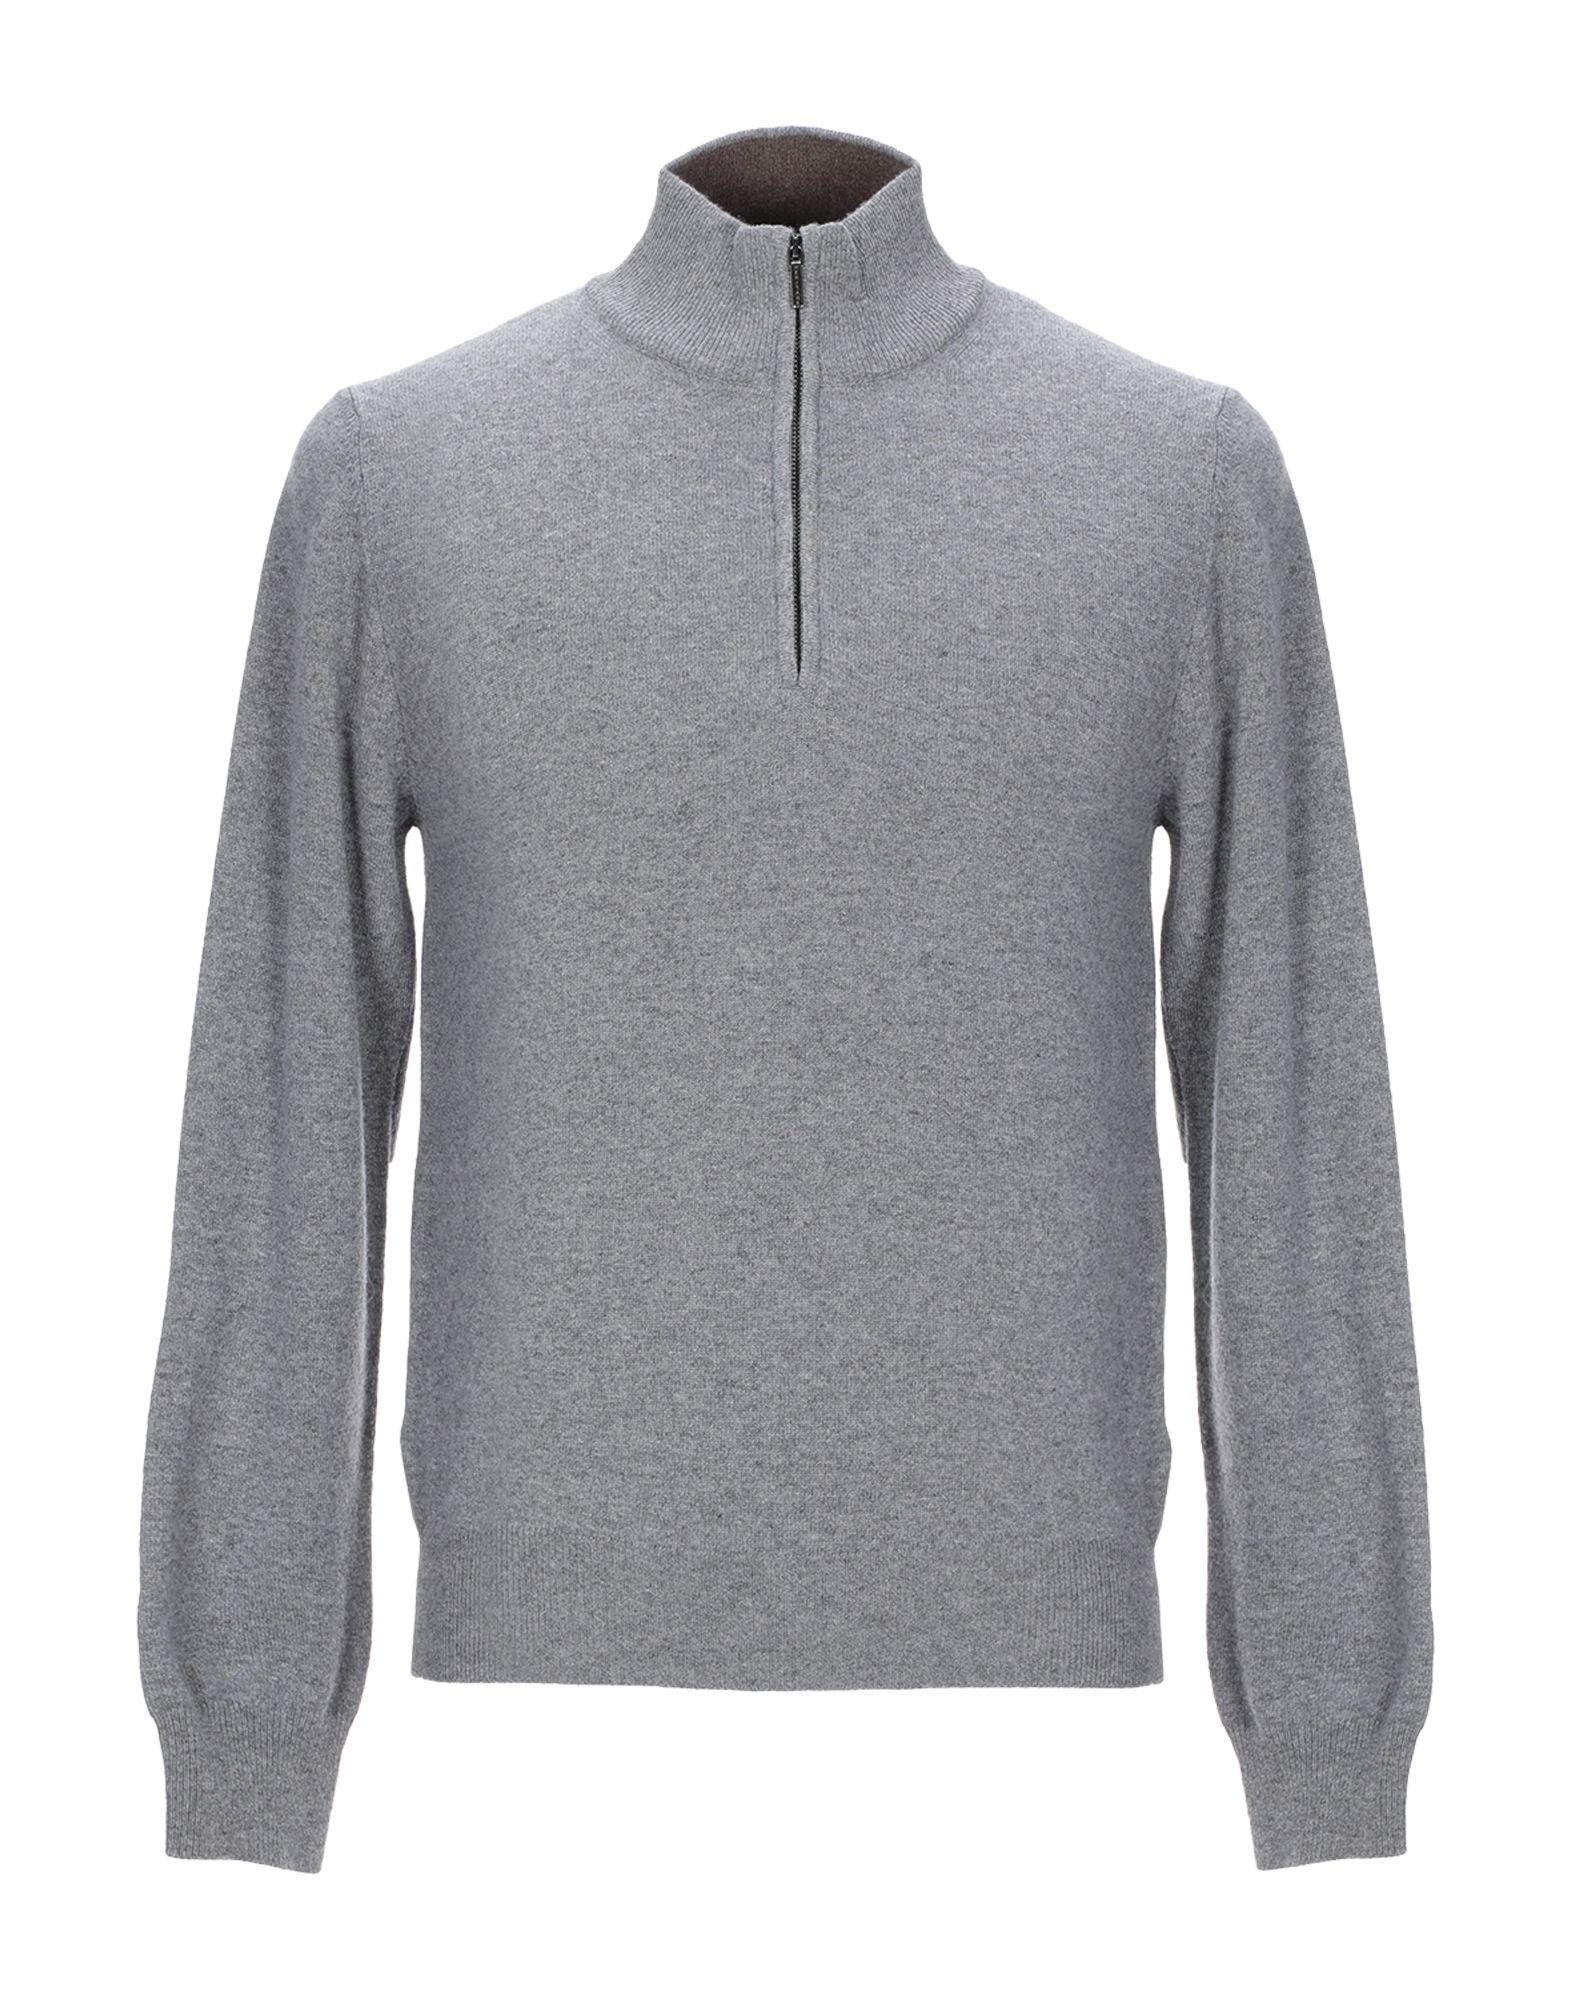 Heritage Wool Turtleneck in Grey (Gray) for Men - Lyst